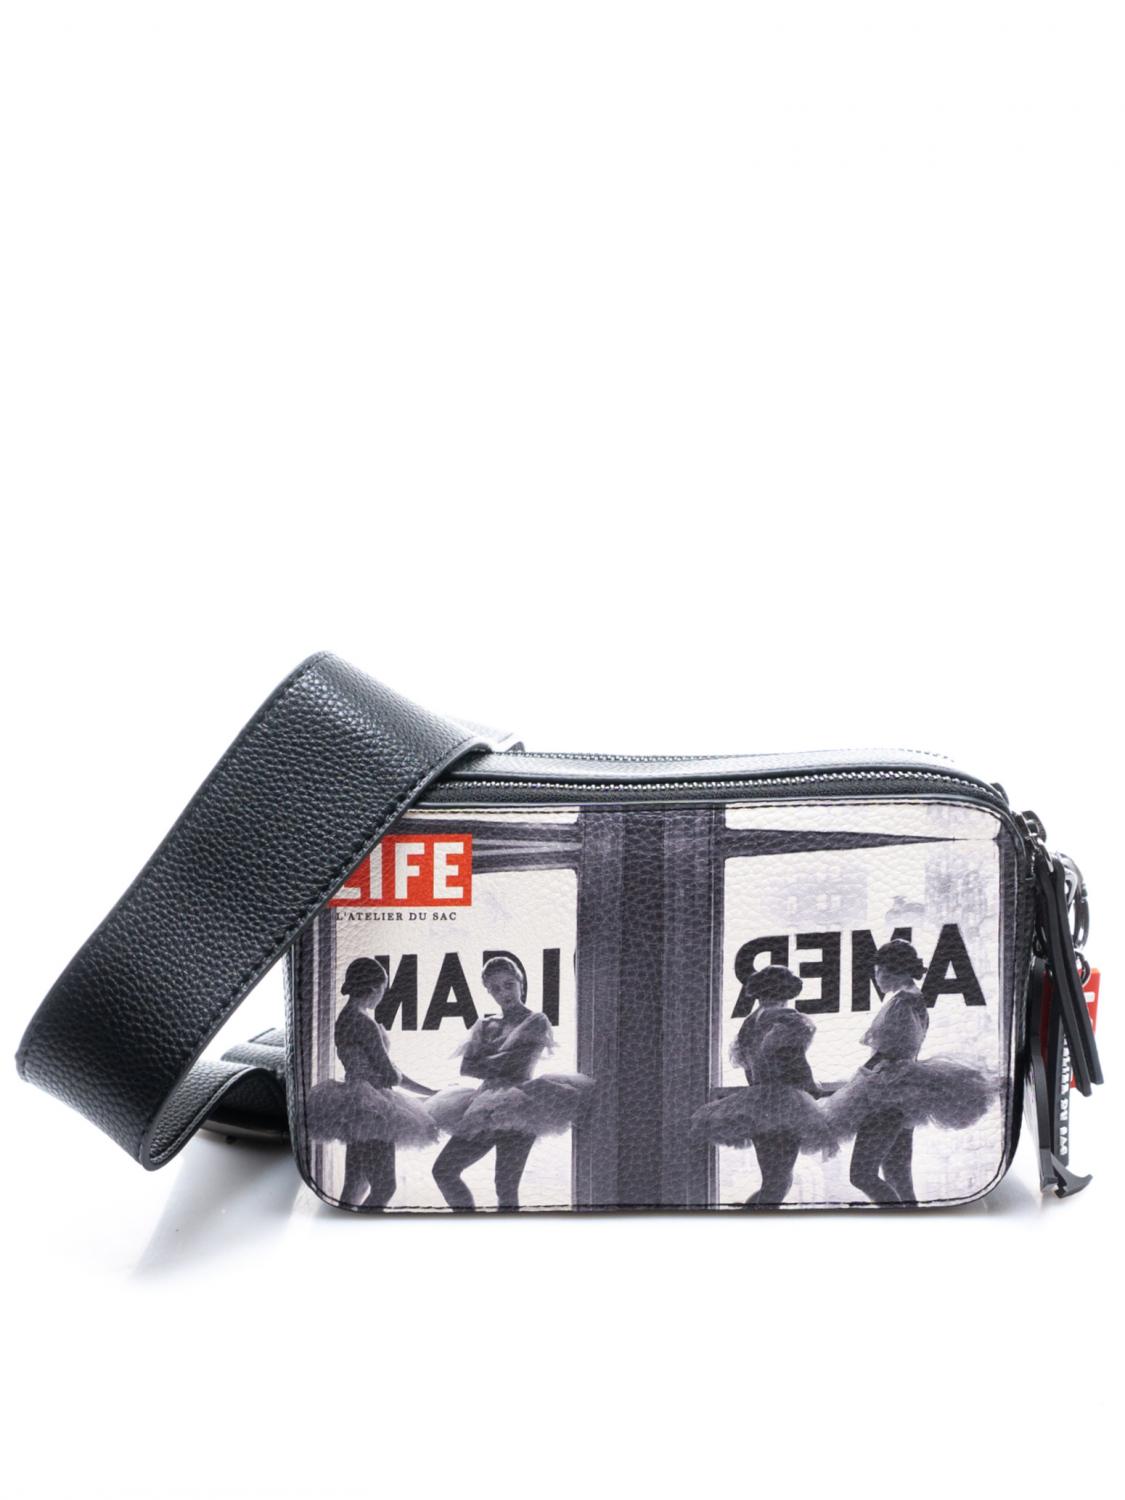 35mm Film Camera Shoulder Bag Pouch Black With Blue Trim - Etsy UK | Camera  shoulder bag, Film camera, 35mm film